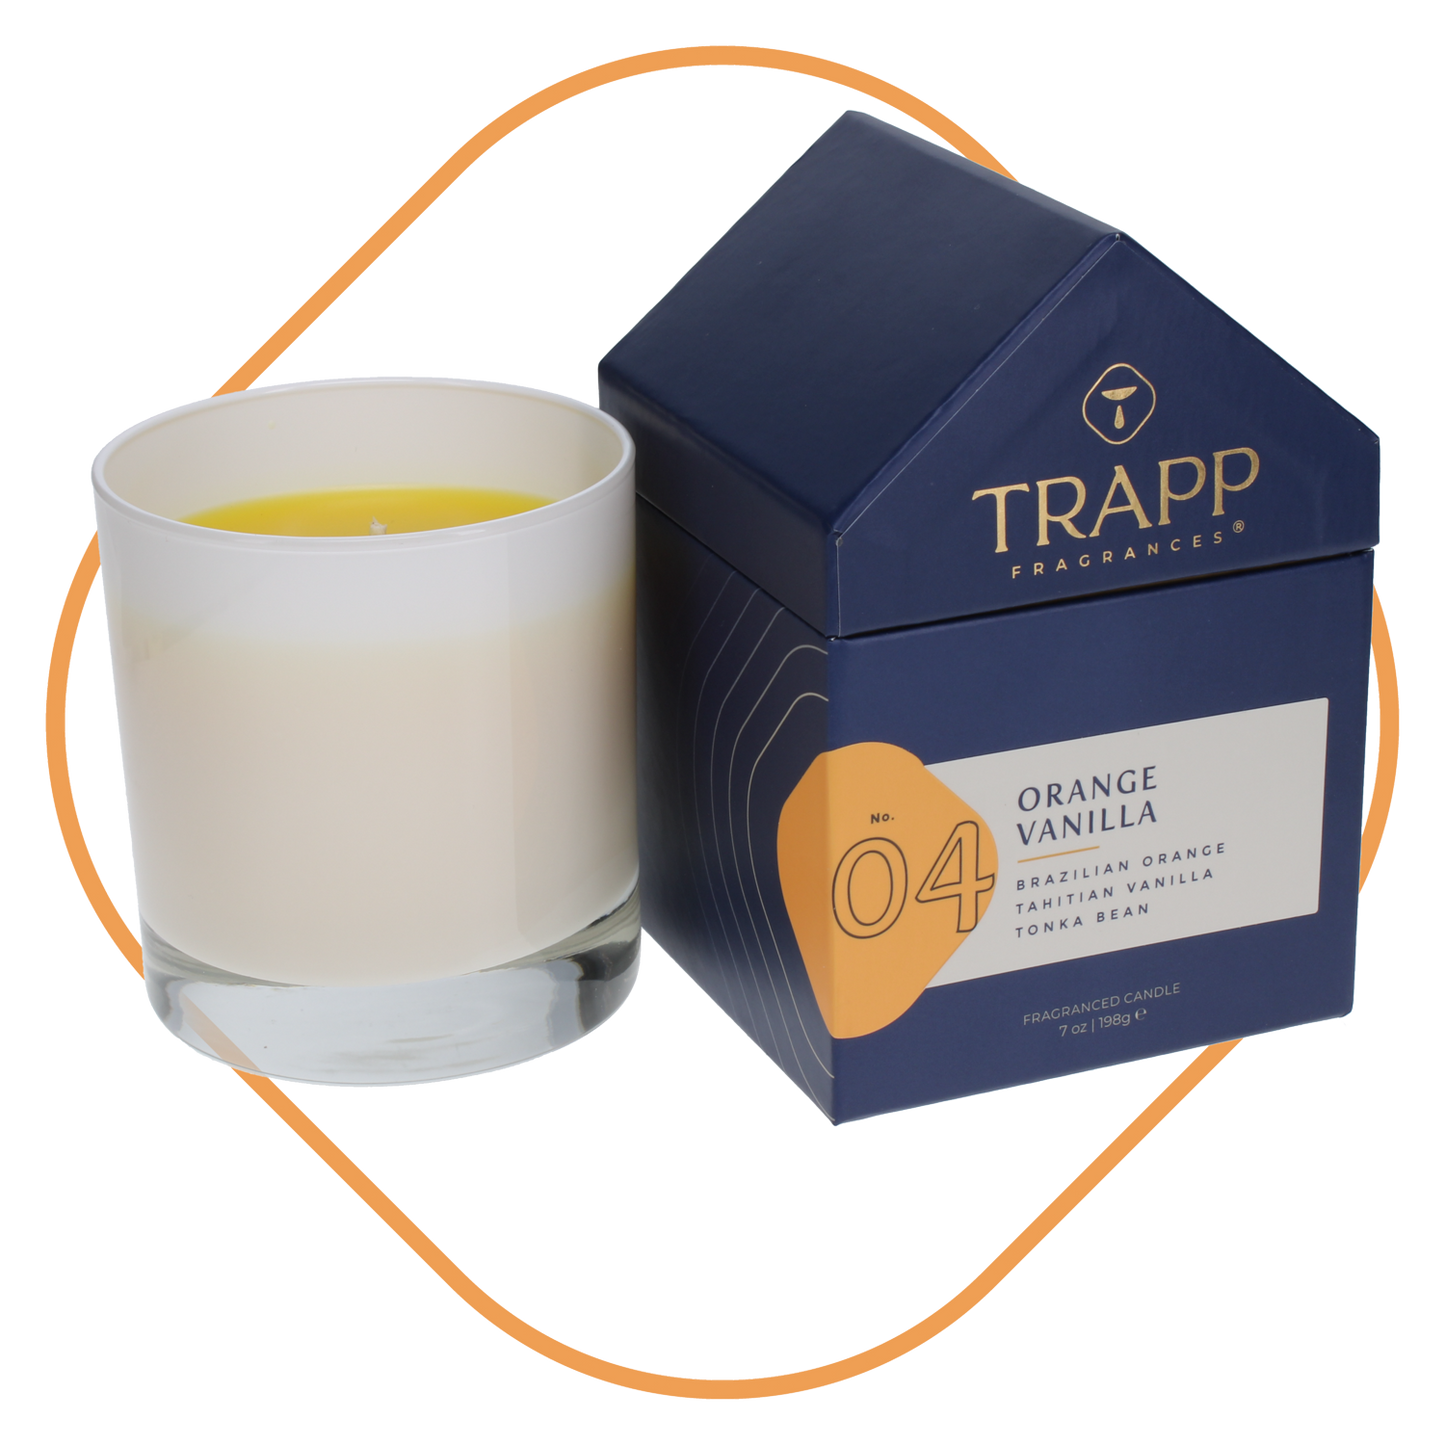 Trapp Fragrances Wax Melts, 2.6 oz No.04 Orange Vanilla